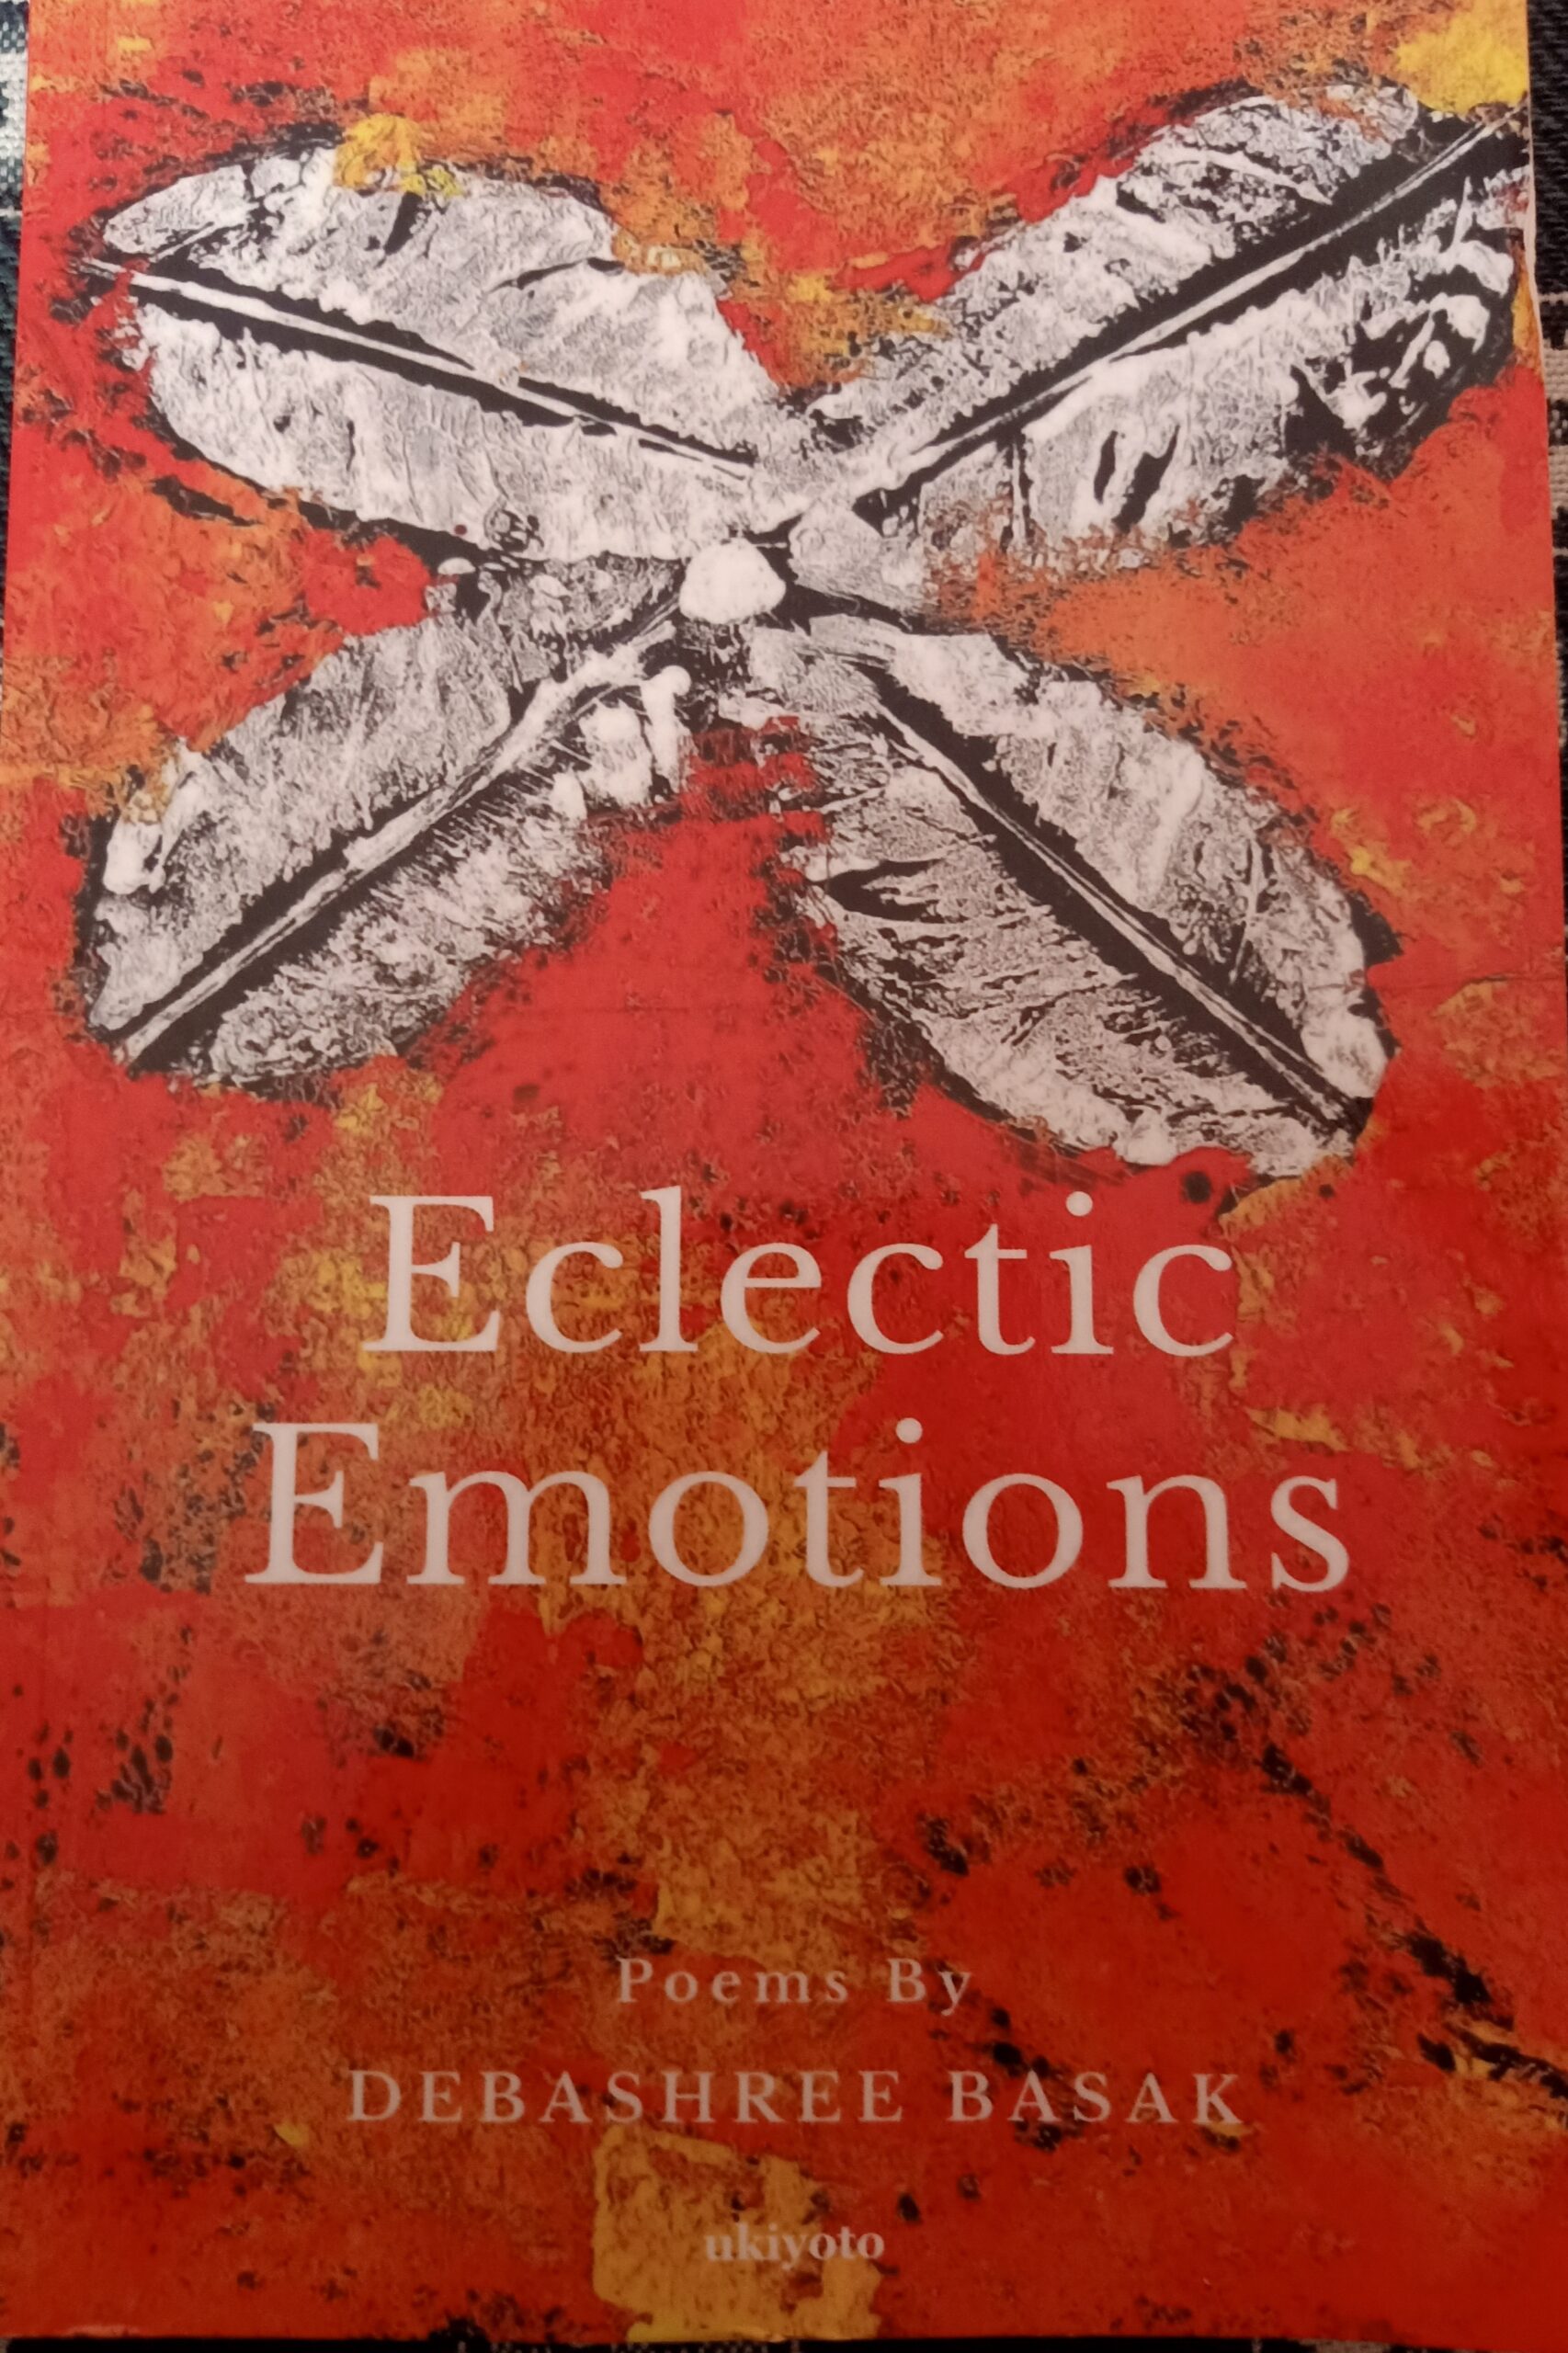 Eclectic Emotions by Debashree Basak